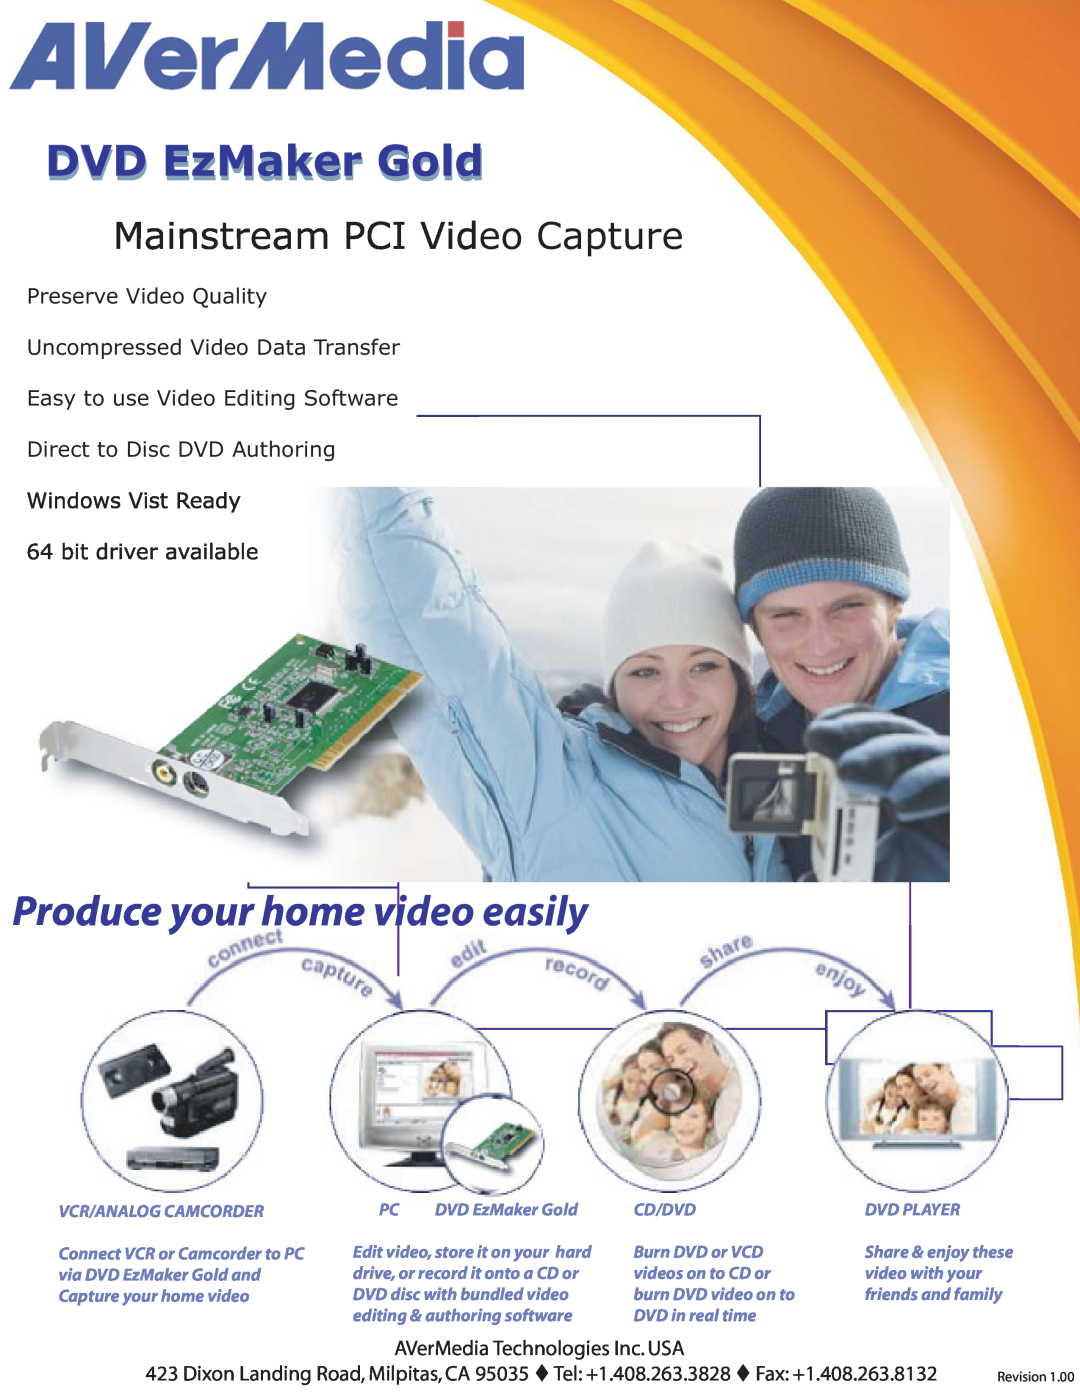 AVerMedia Technologies Mainstream PCI Video Capture manual AVerMedia Technologies Inc. USA, DVD EzMaker Gold 